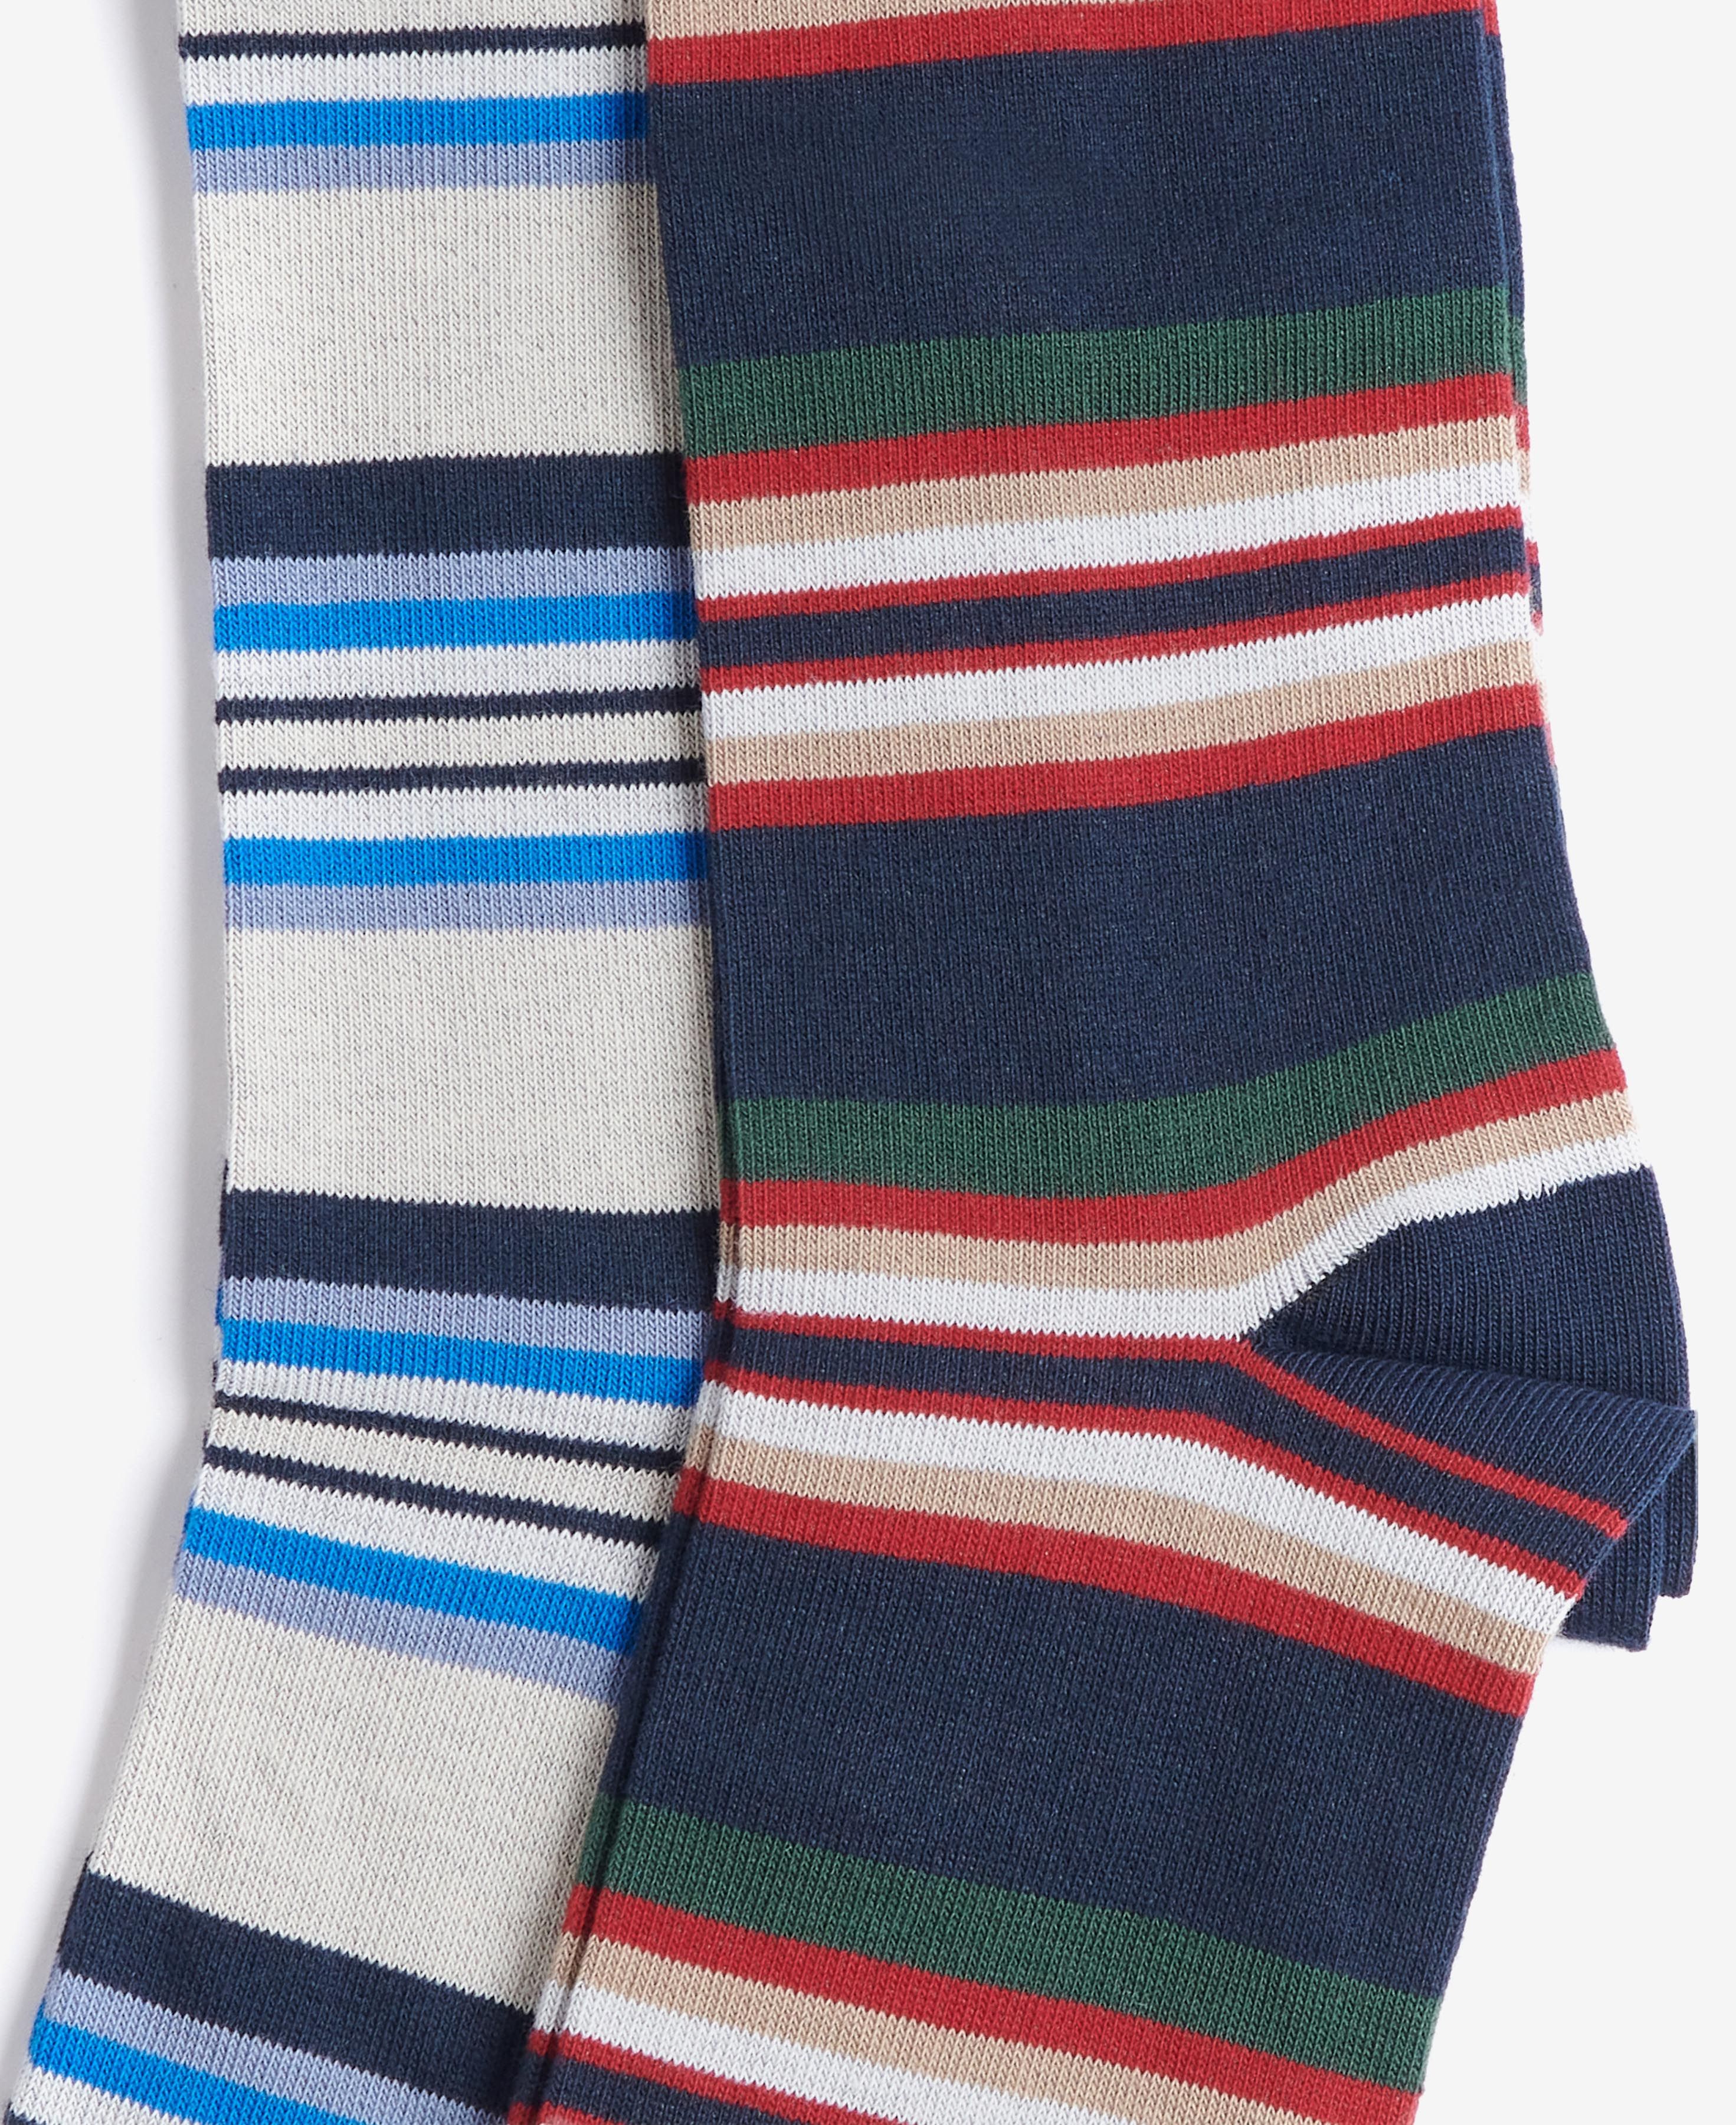 Shop the Barbour Summer Stripe Socks today. | Barbour